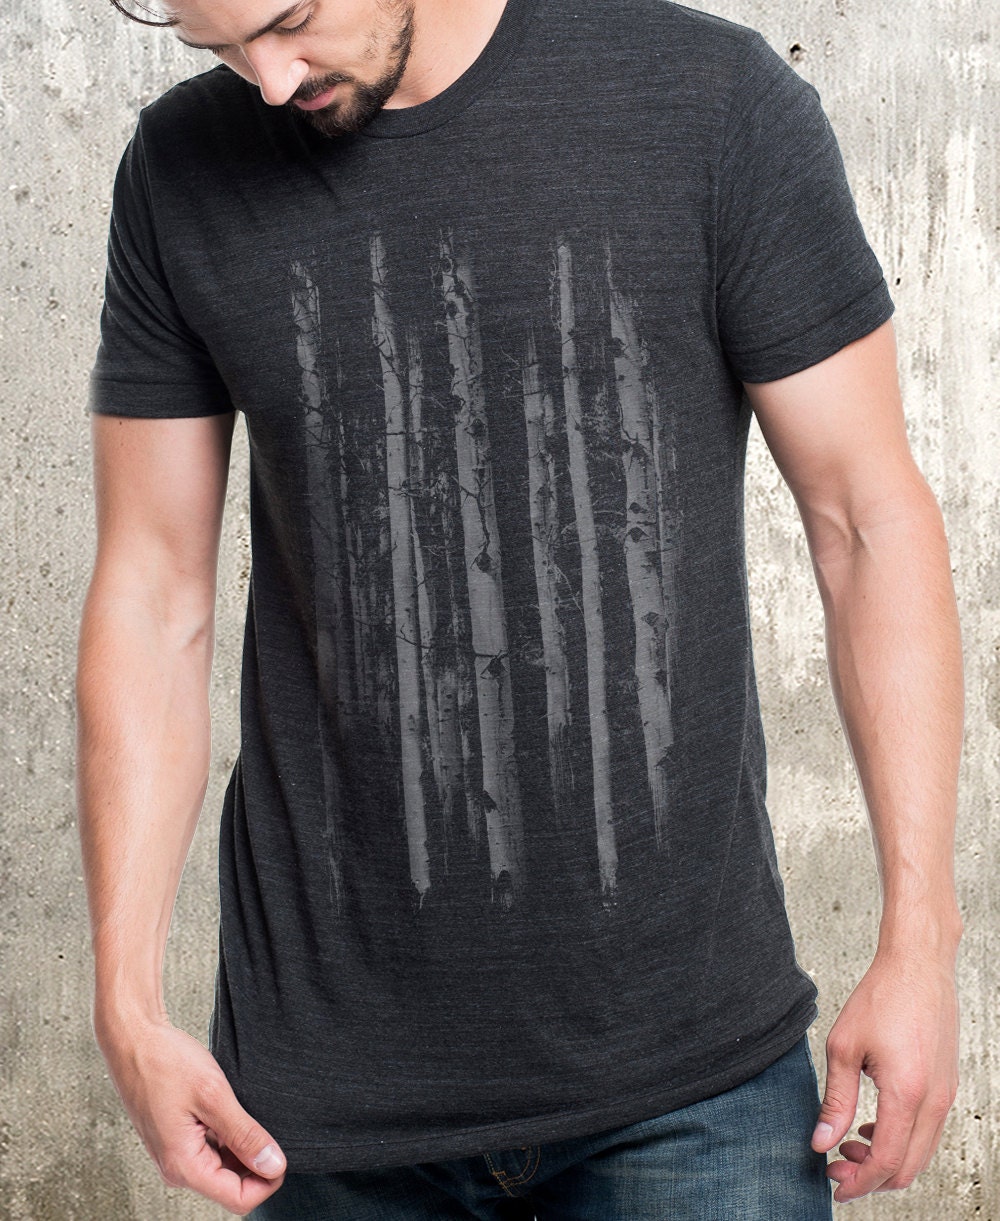 Men's Tri-Blend Graphic Tees - Grunge Forest Hiking Tshirt Men T Shirt Gifts For Men/Unisex |Tri-Black